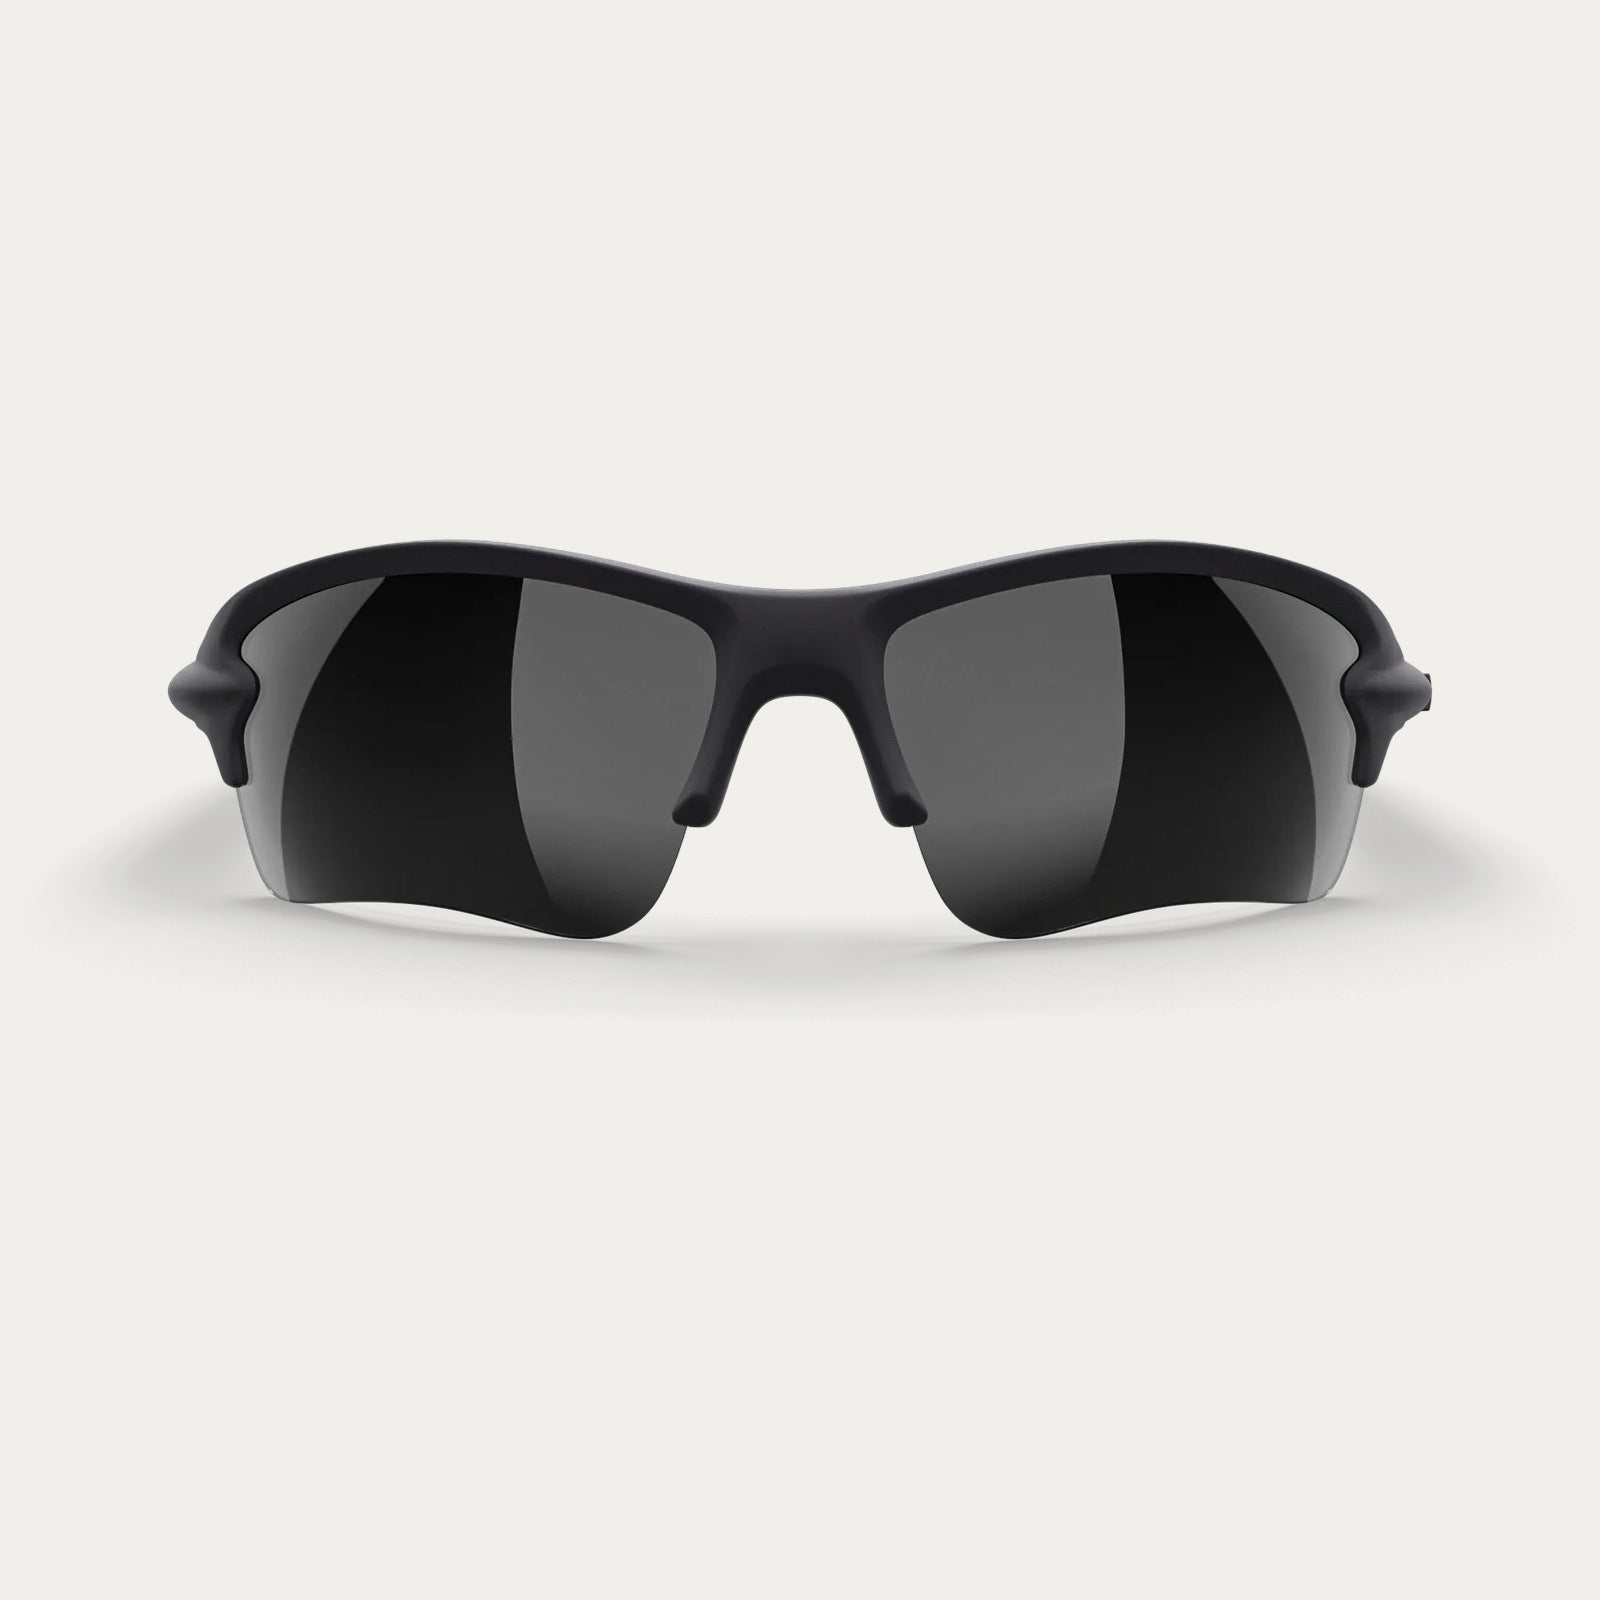 Reks | Aviator Polycarbonate Sunglasses Black Red Mirror